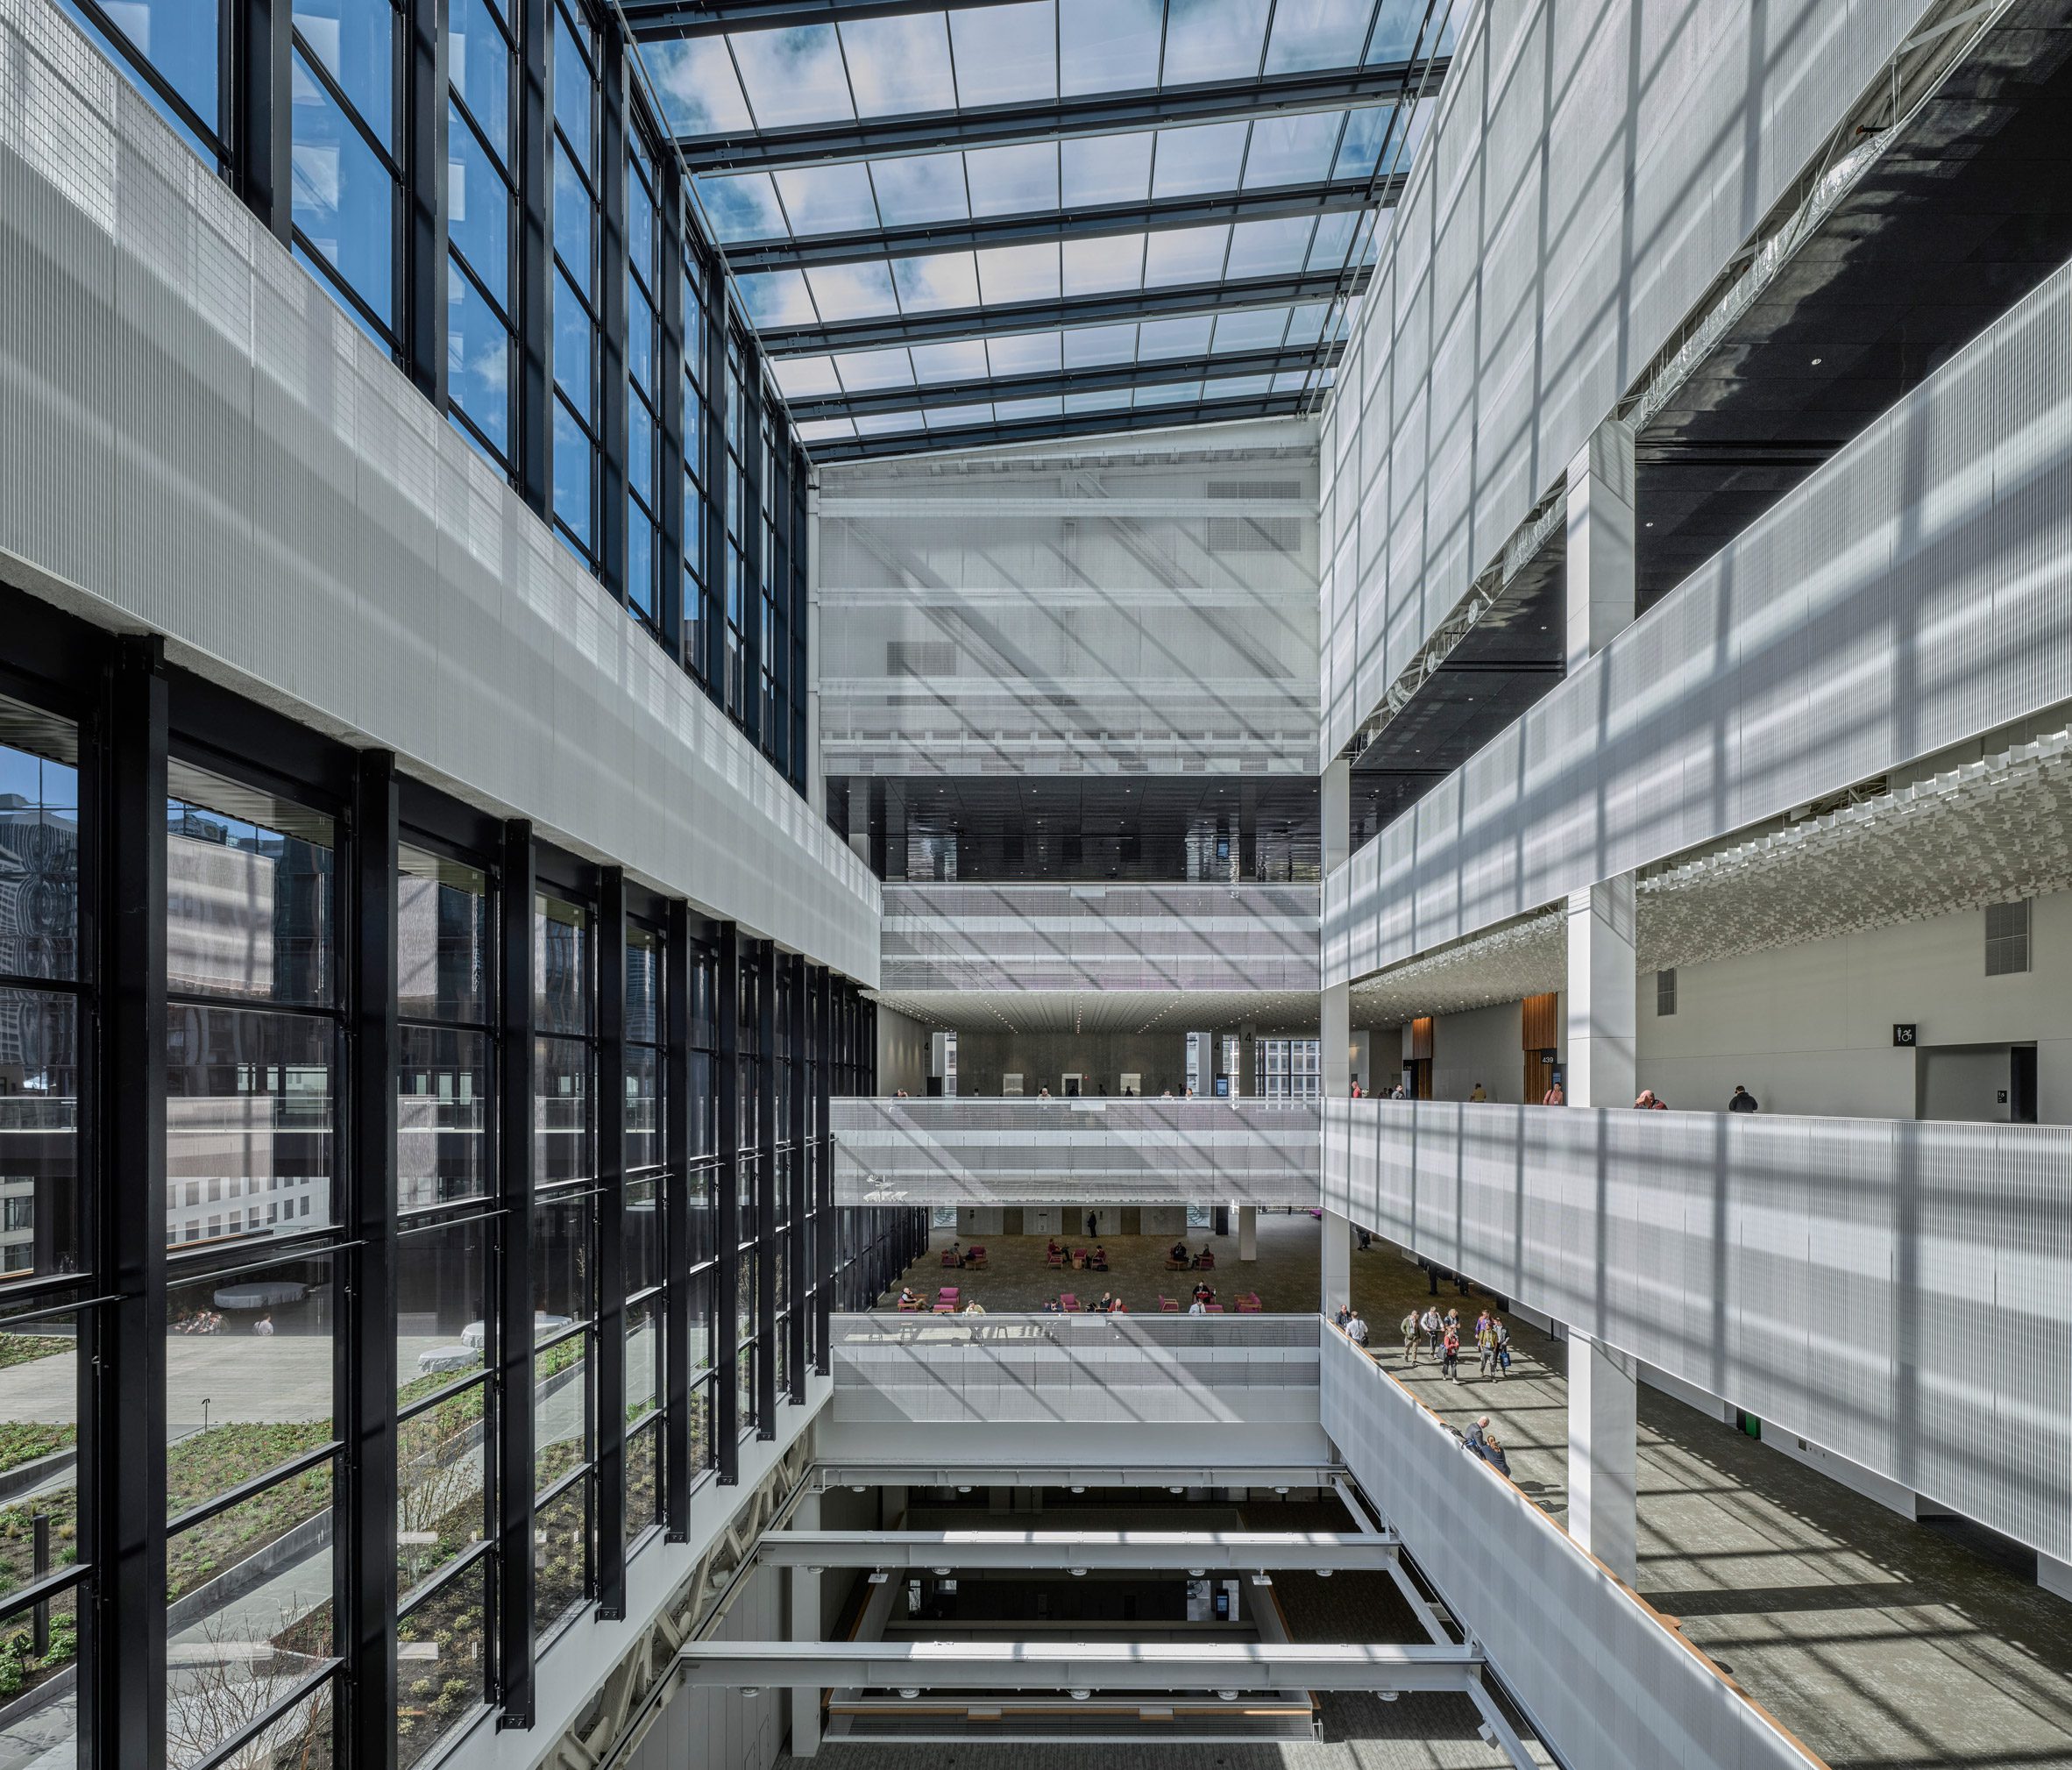 A central atrium spanning multiple floors